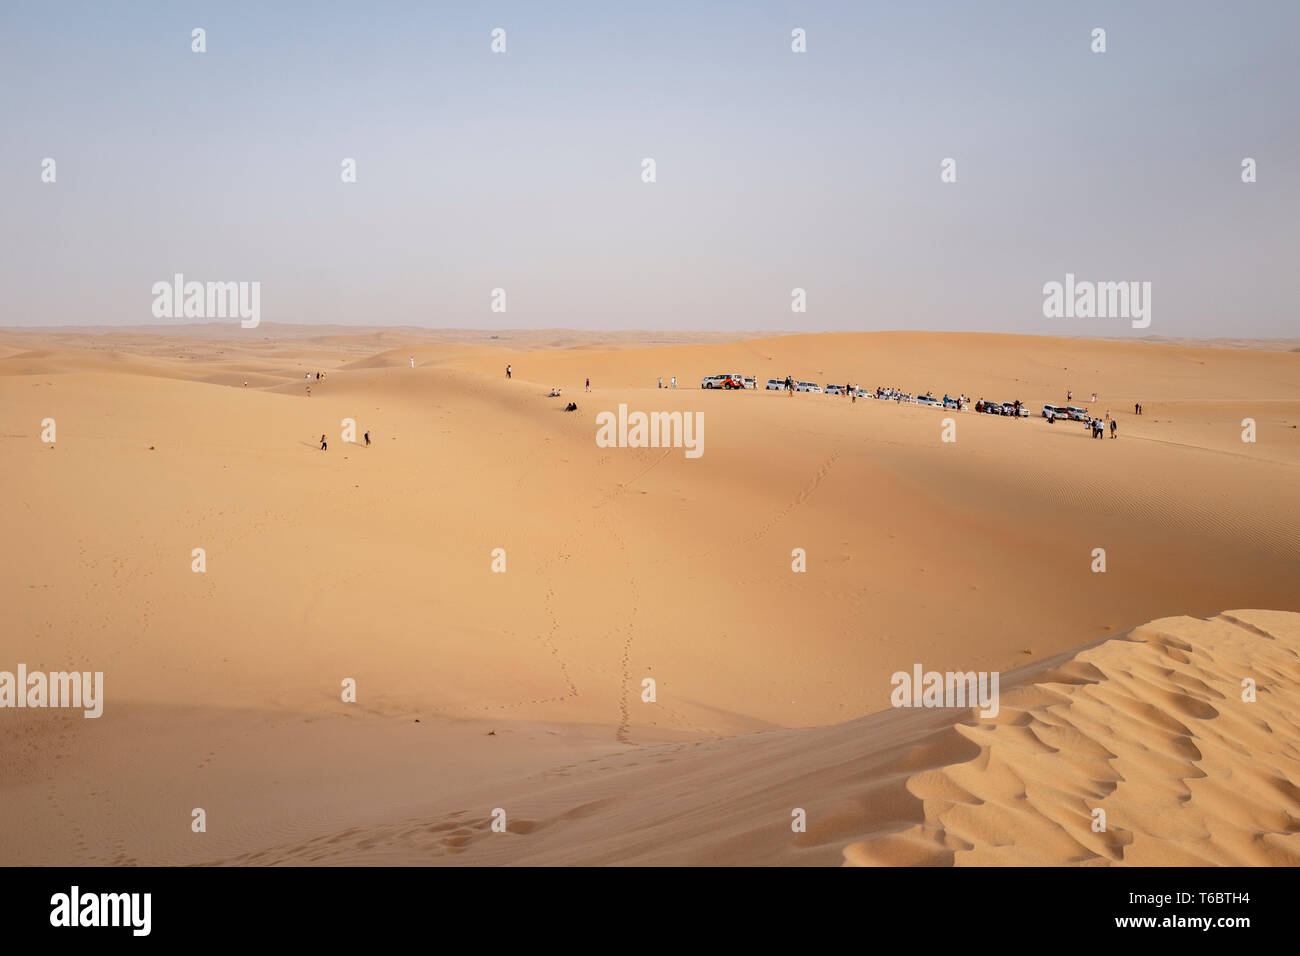 Dune Bashing desert safari à Abu Dhabi, Émirats arabes unis Banque D'Images